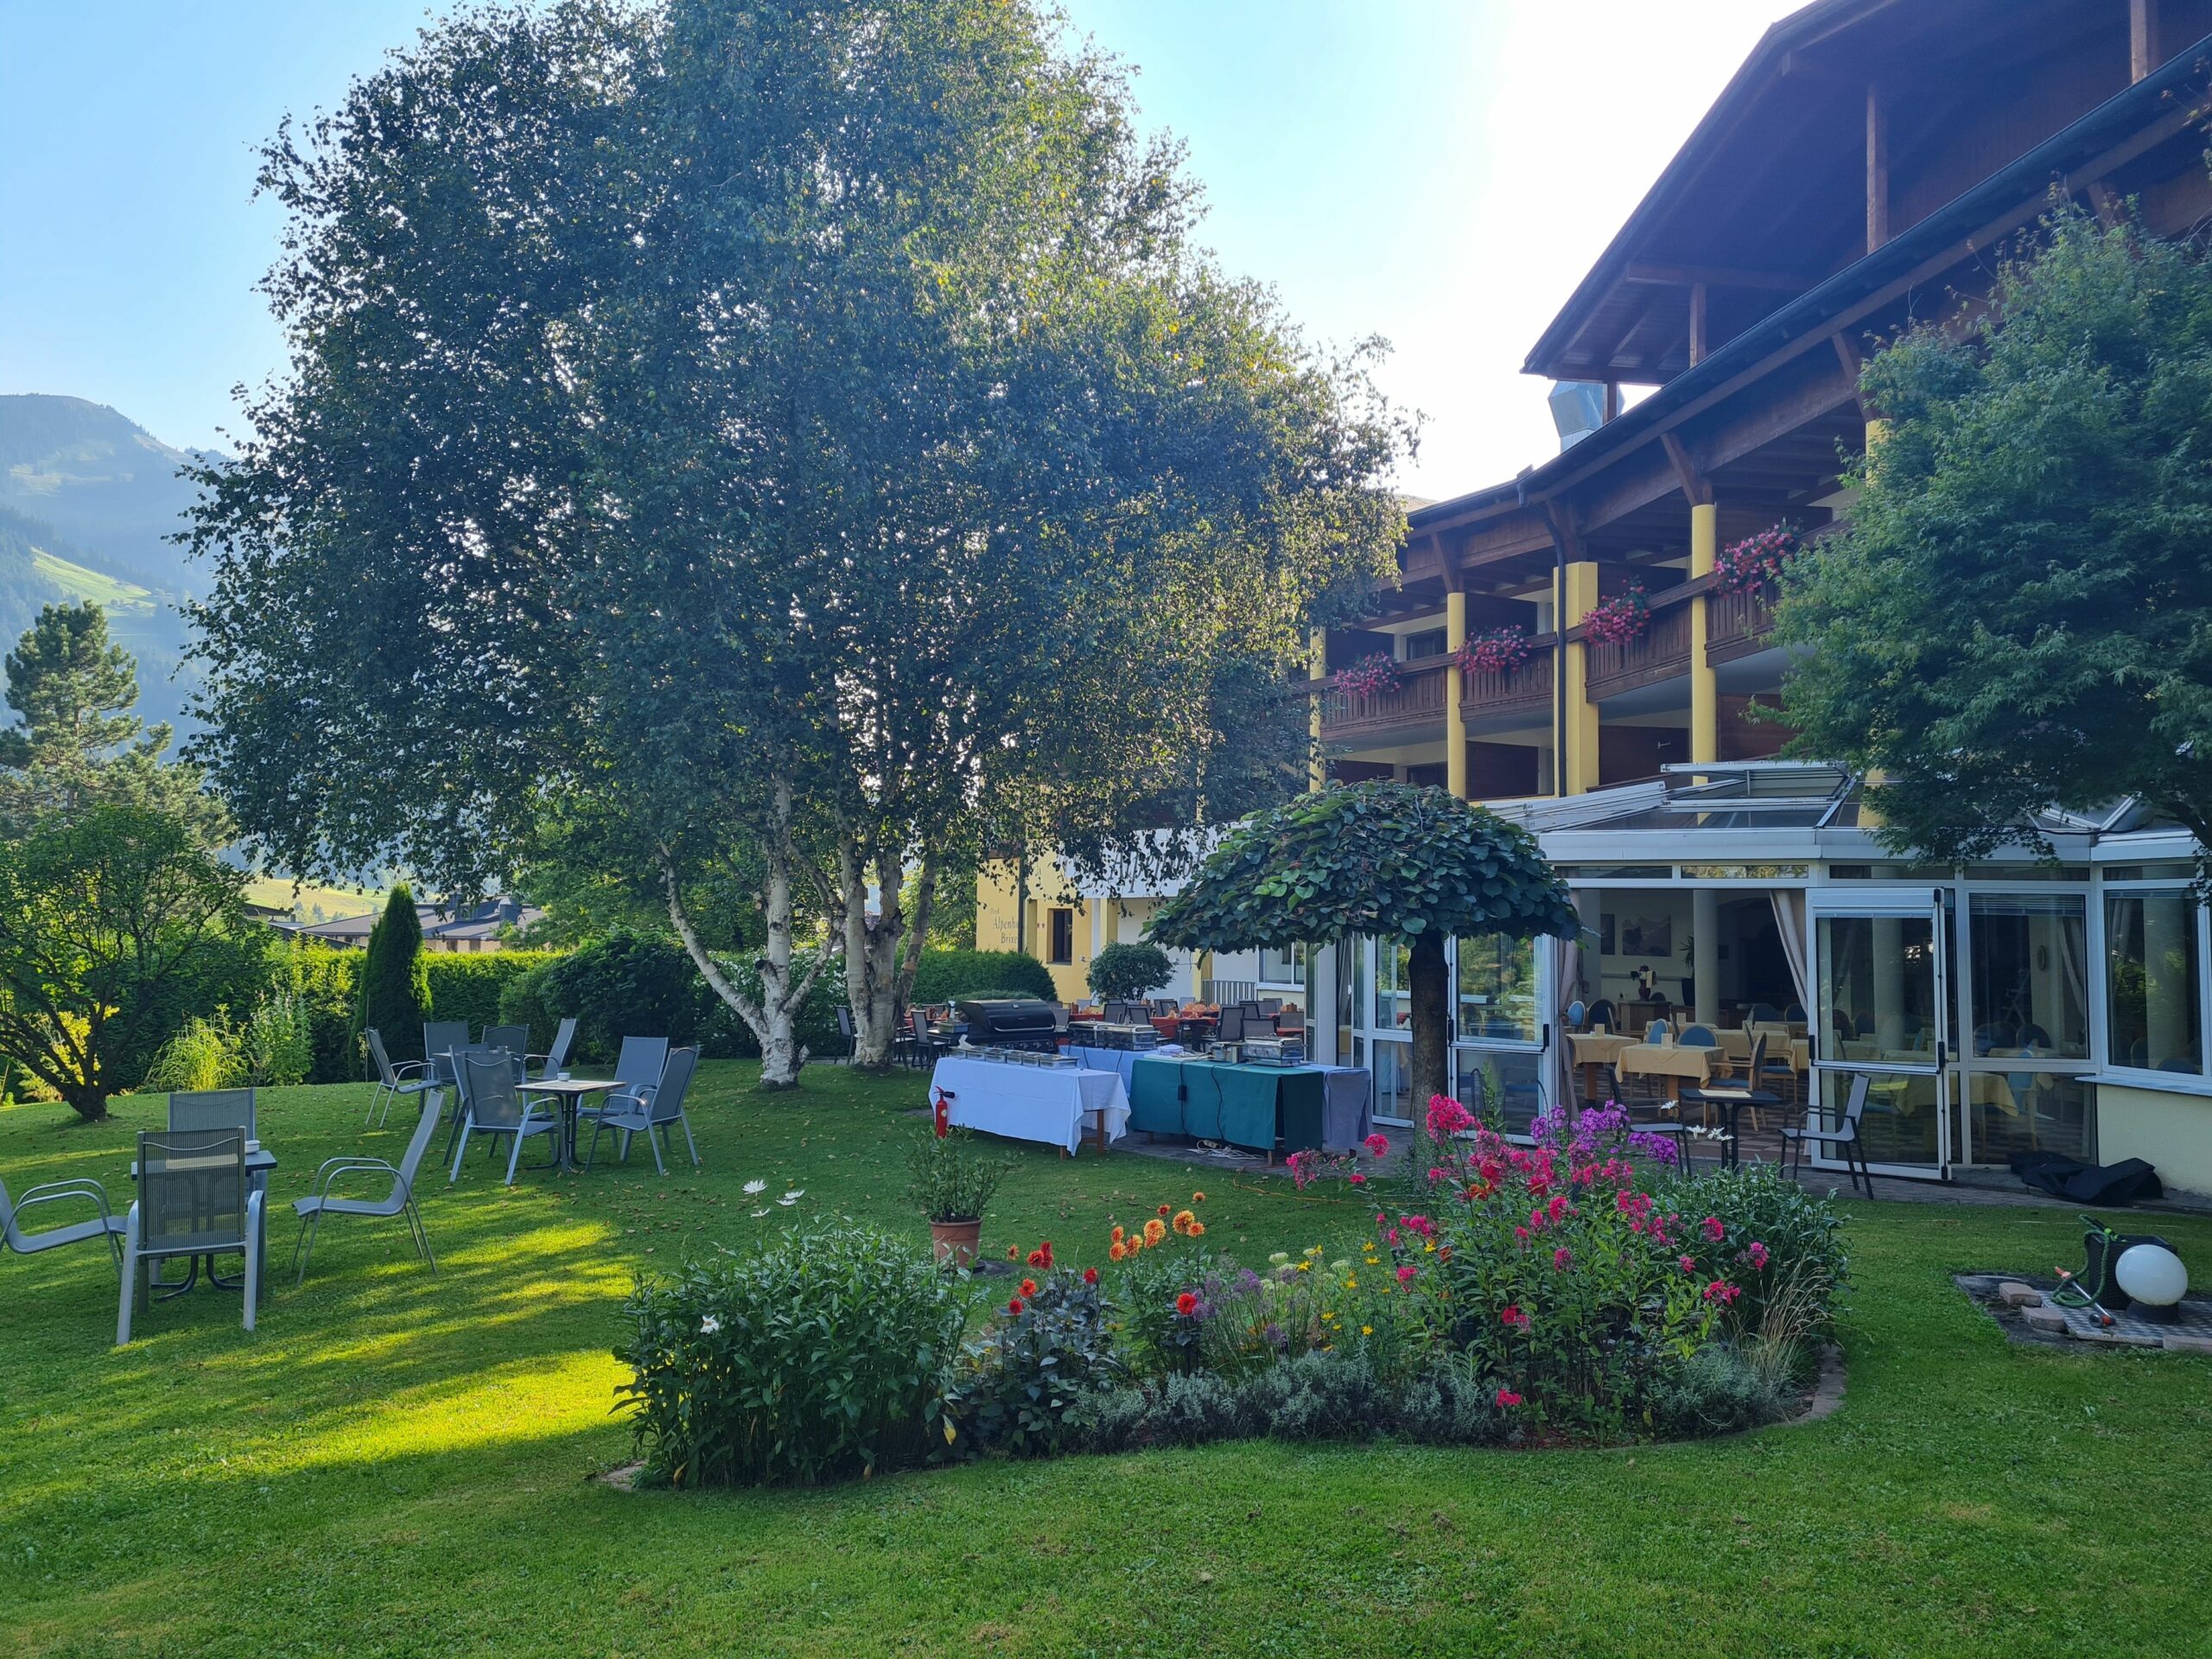 Hotel Alpenhof Brixen - Grill im Garten (c) Hotel Alpenhof Brixen